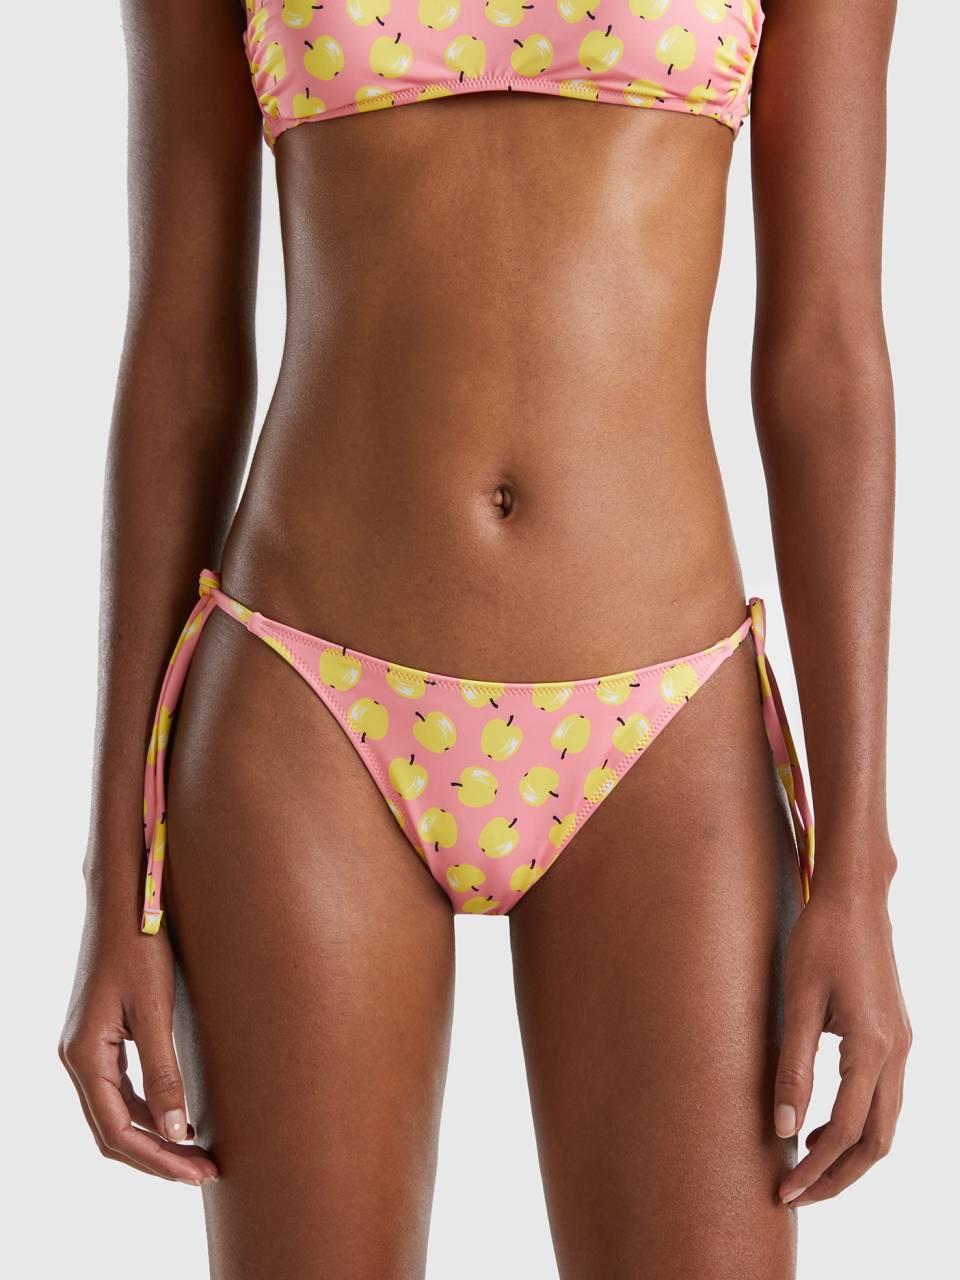 Benetton pink swim bottoms with apple pattern. 1